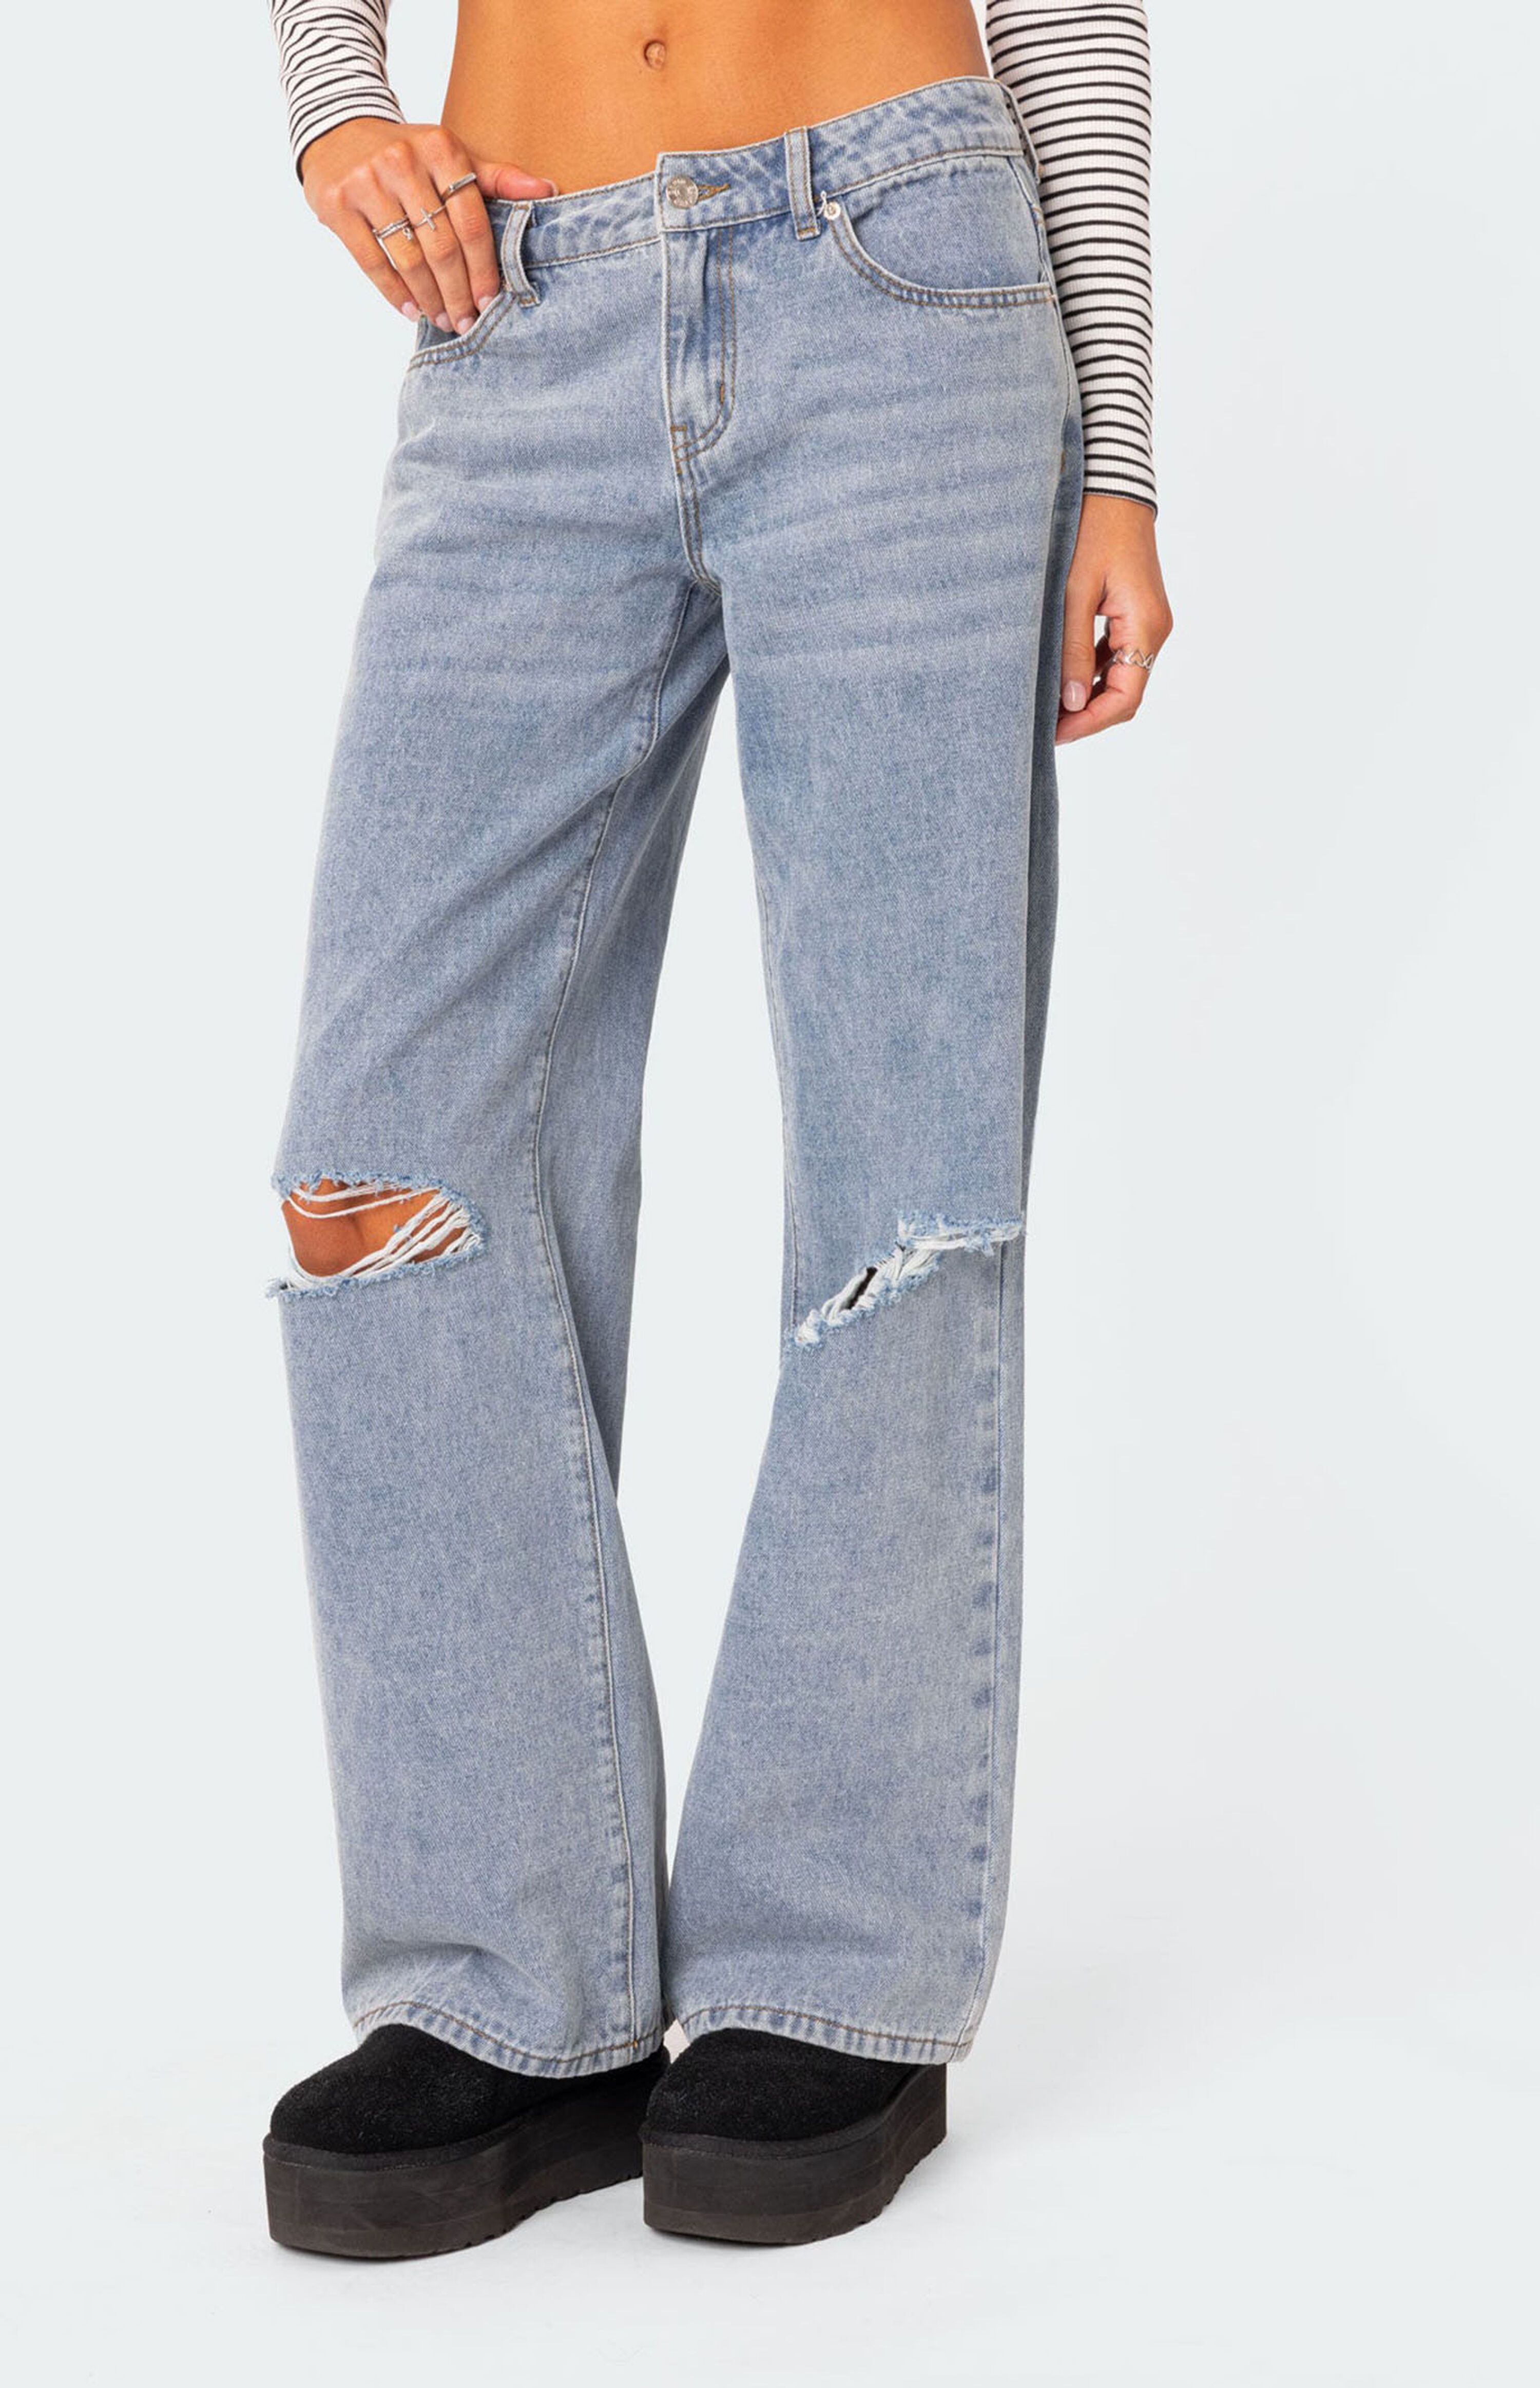 Edikted Debbie Distressed Low Rise Baggy Jeans | PacSun